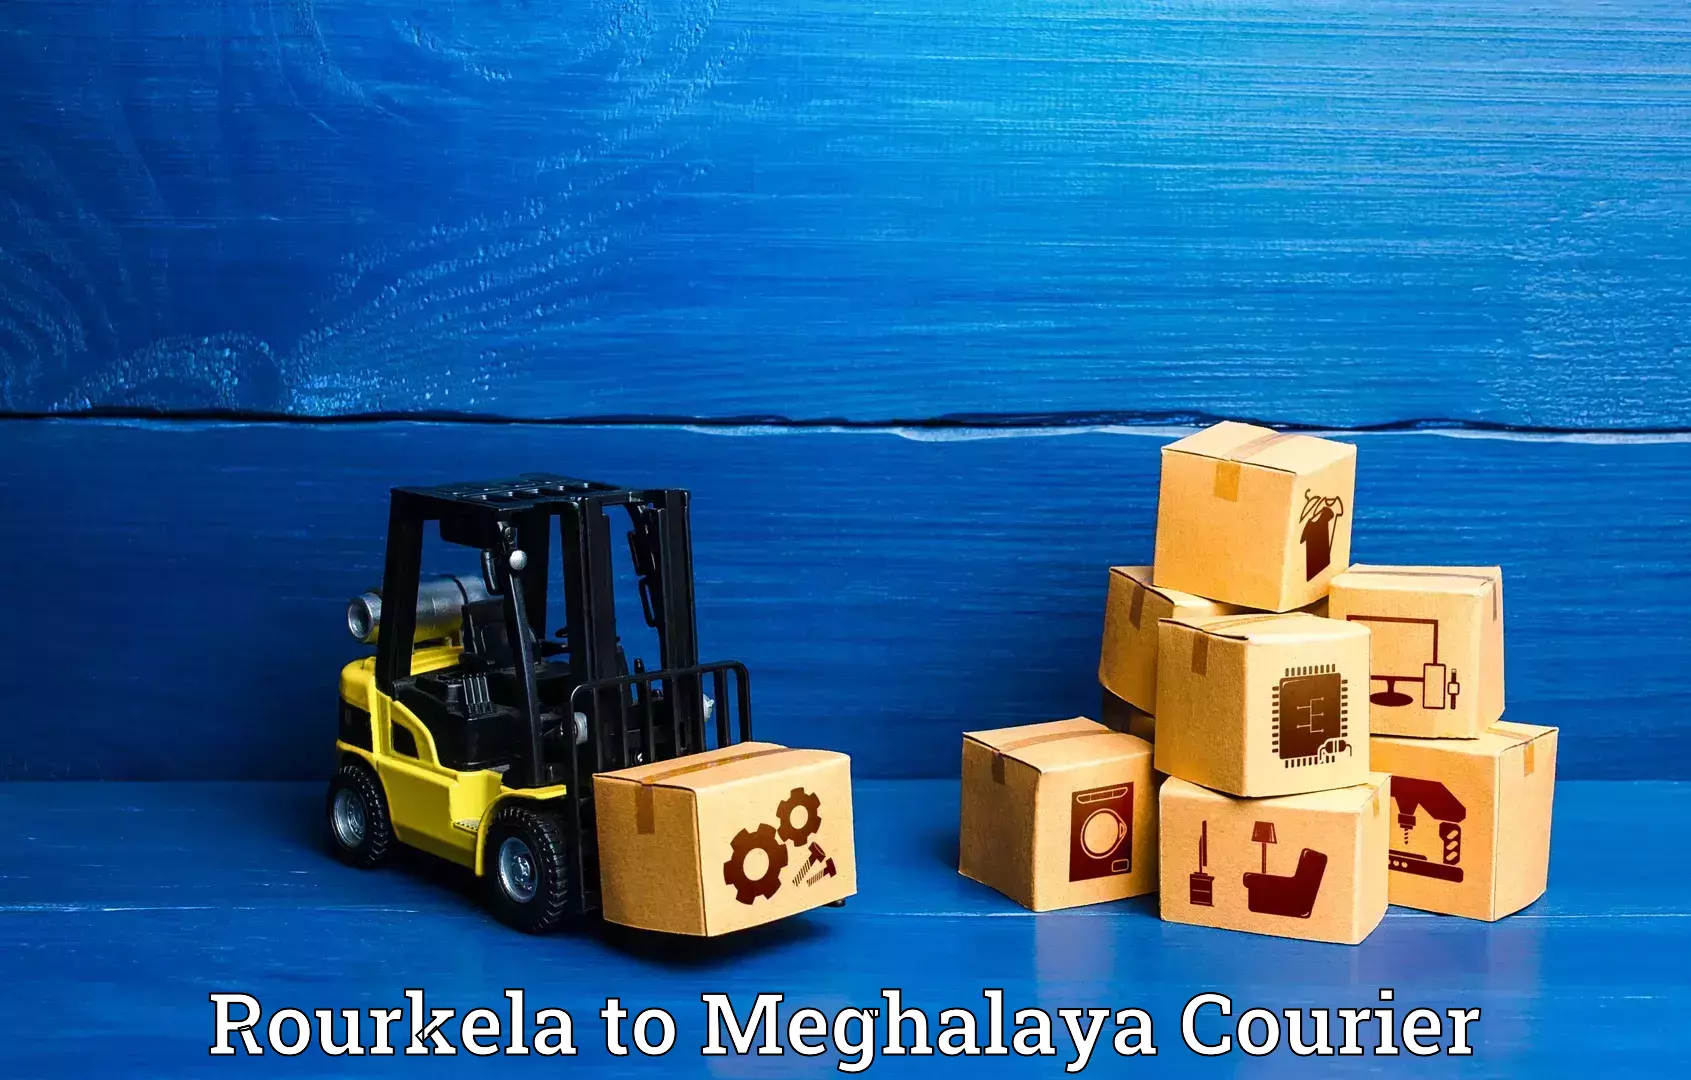 Luggage transport company Rourkela to Shillong